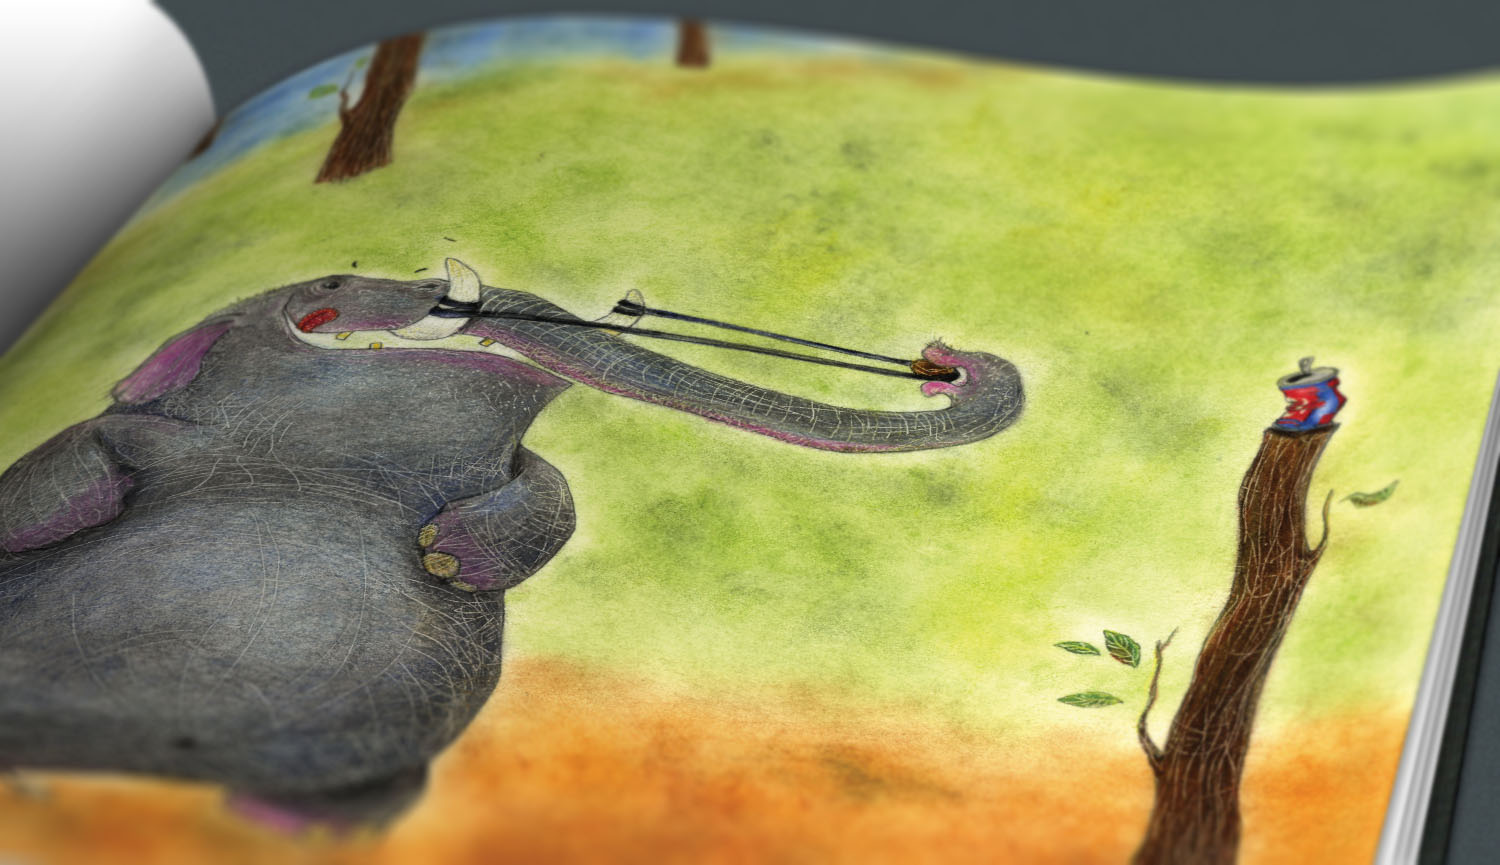 Illustration for Children’s Books - My Rhino